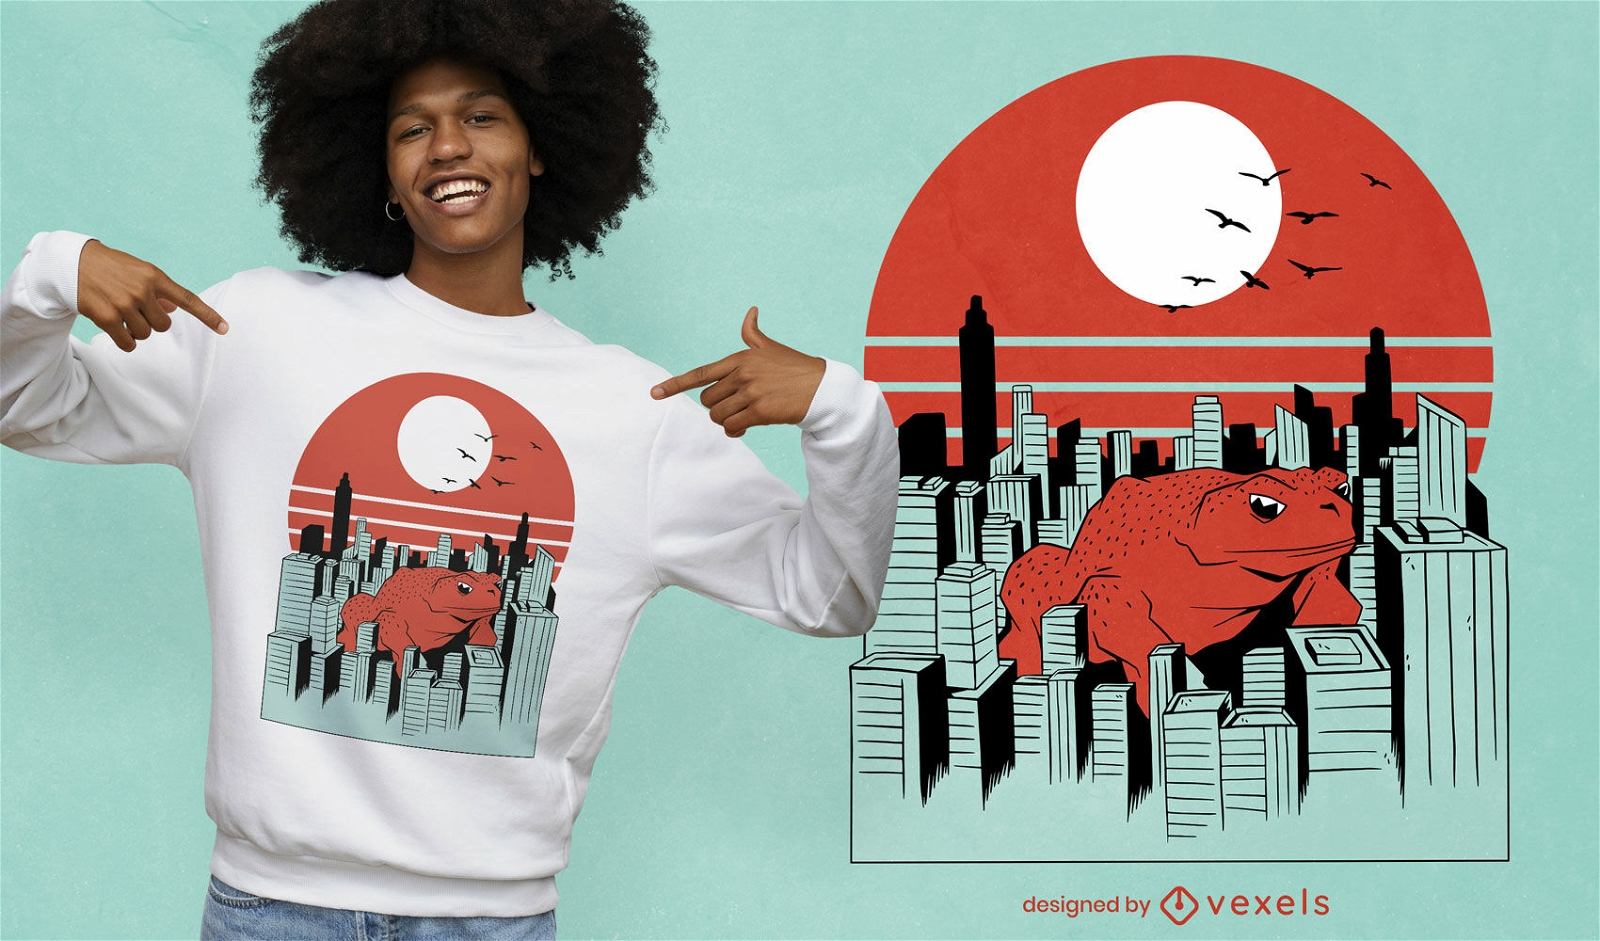 Animal sapo gigante no design de camiseta da cidade